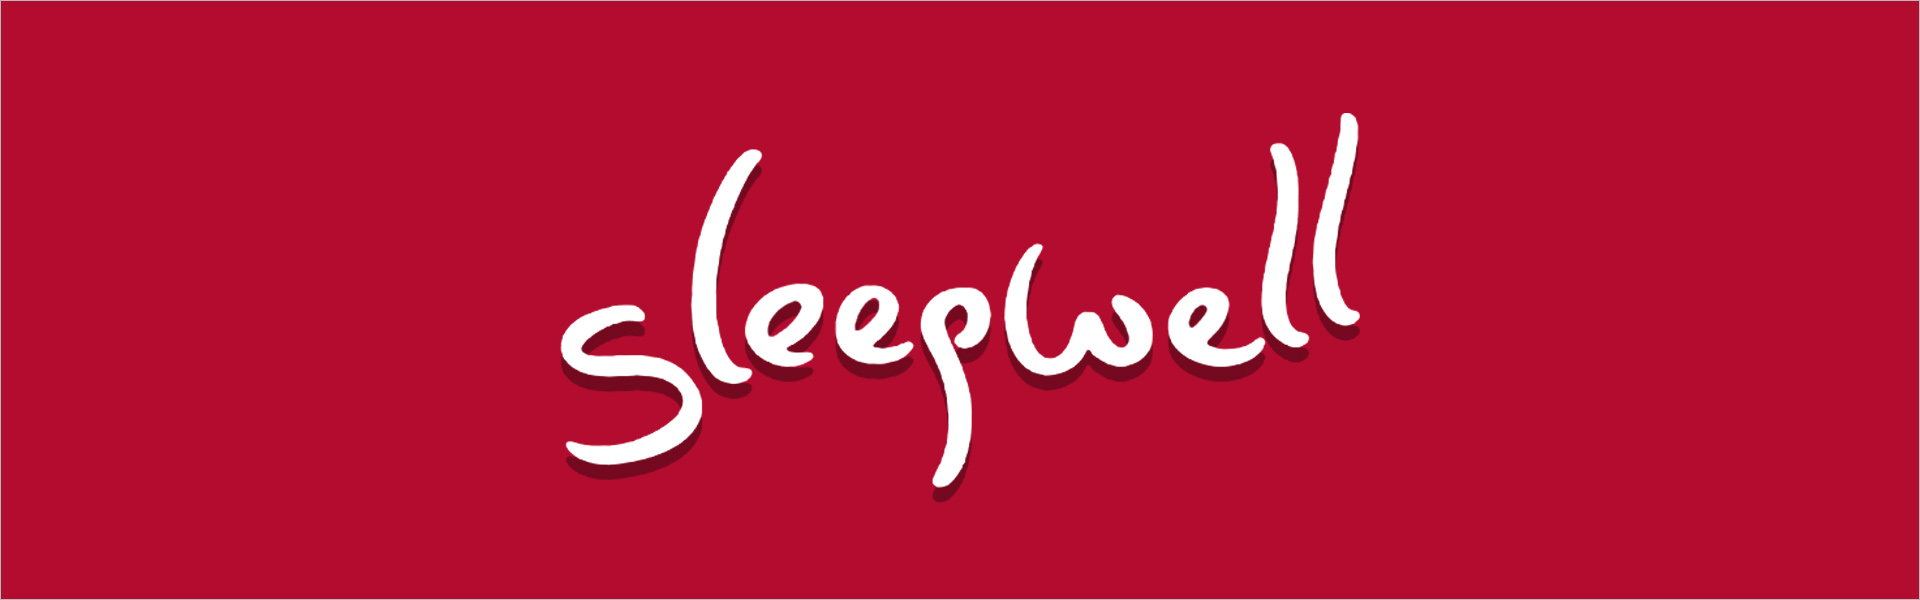 Sleepwell TOP HR-FOAM kattemadrats 160x200 Sleepwell